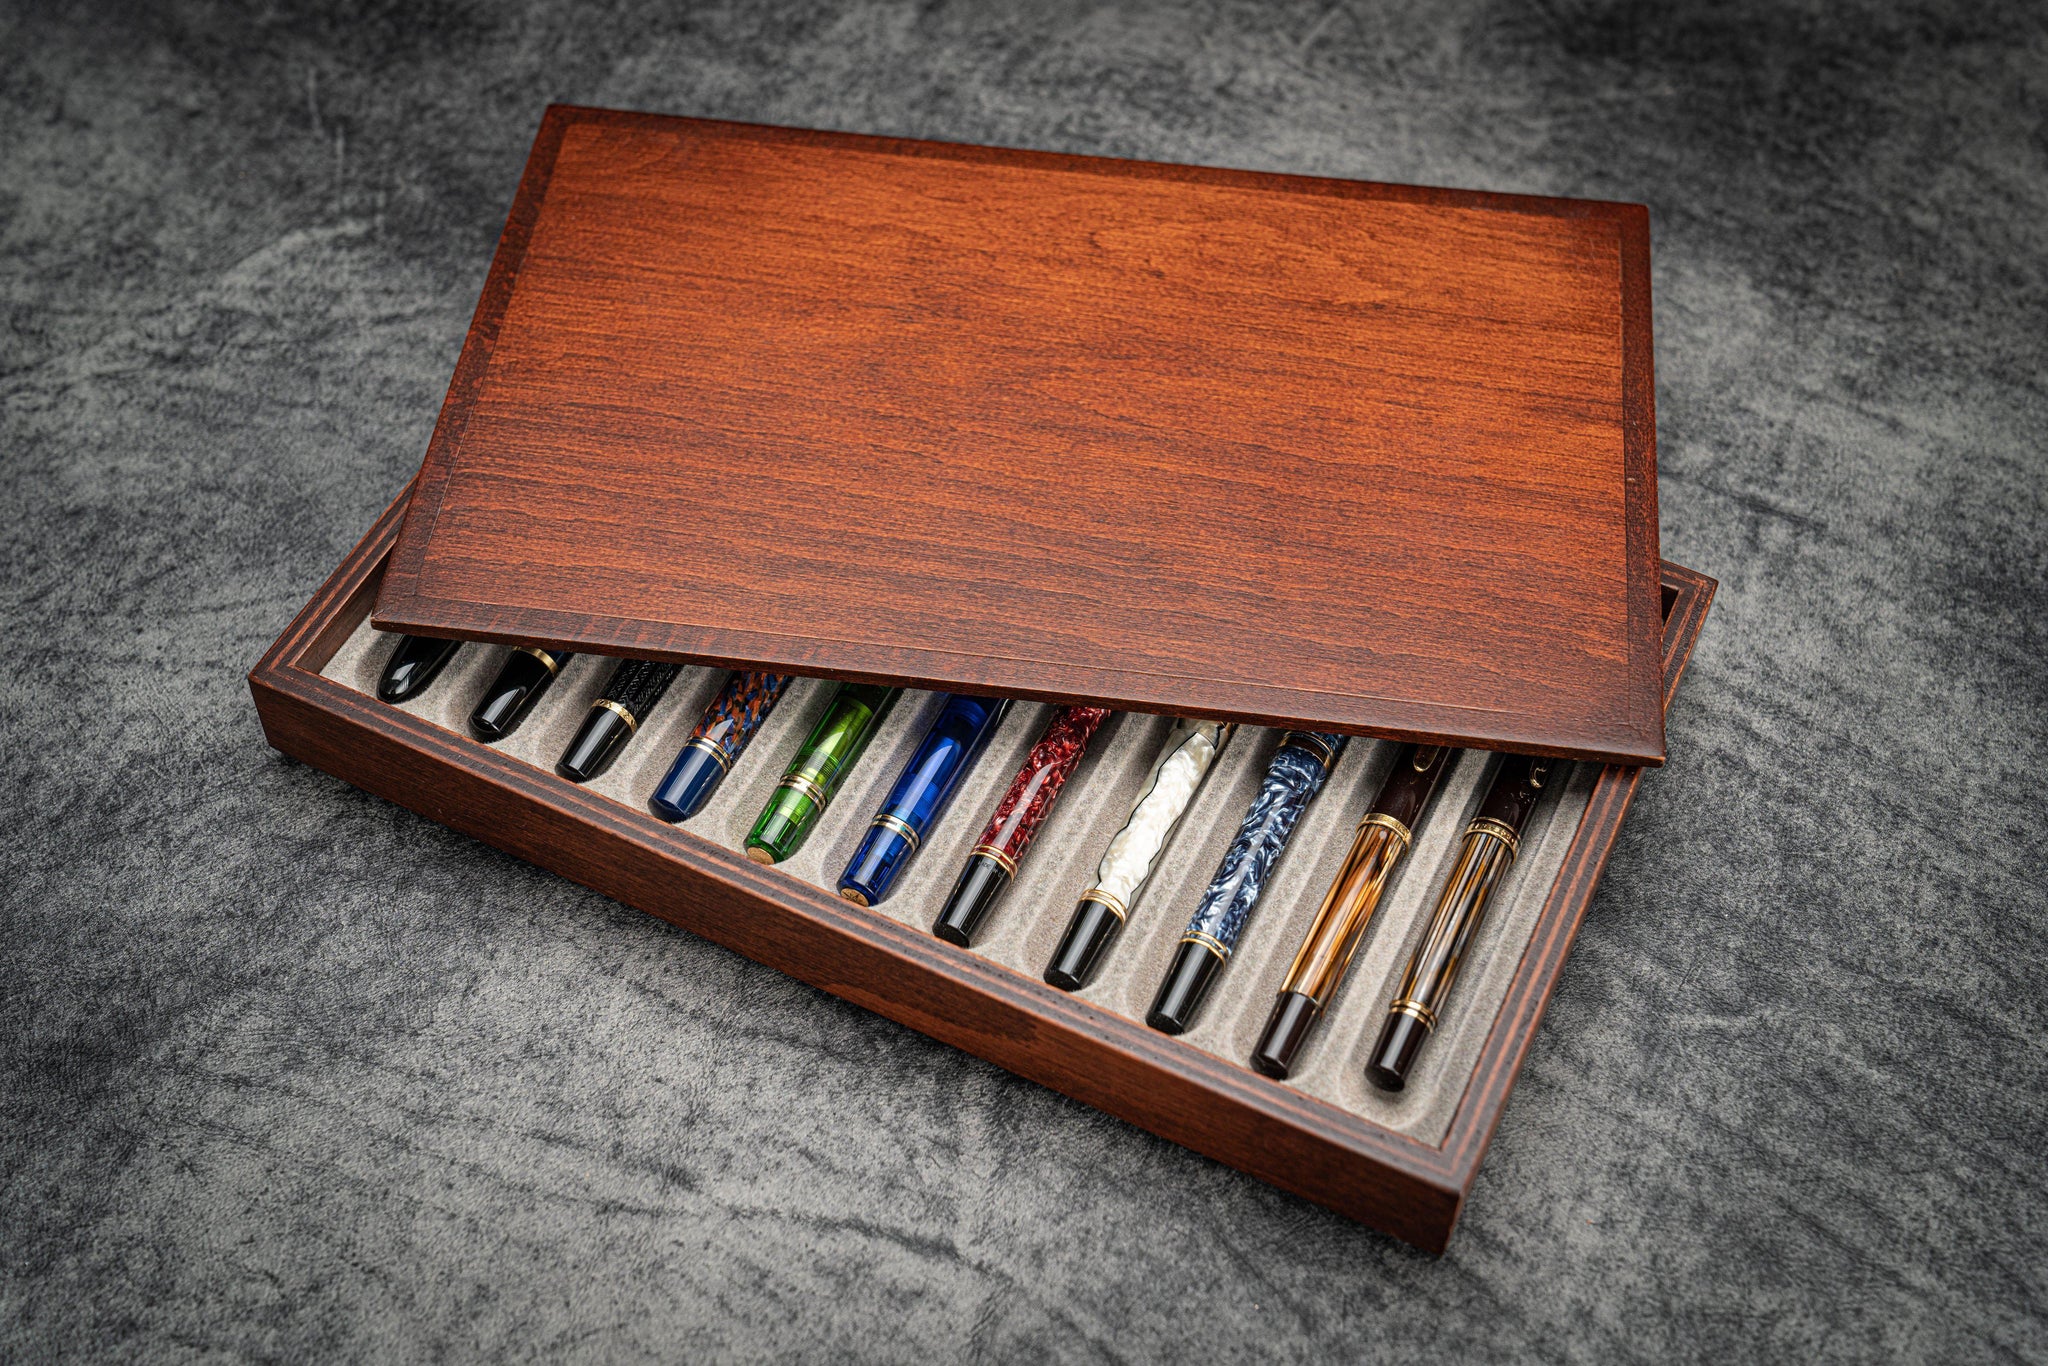 Wood Pen Display Case / Lid - Holds 11 Pens